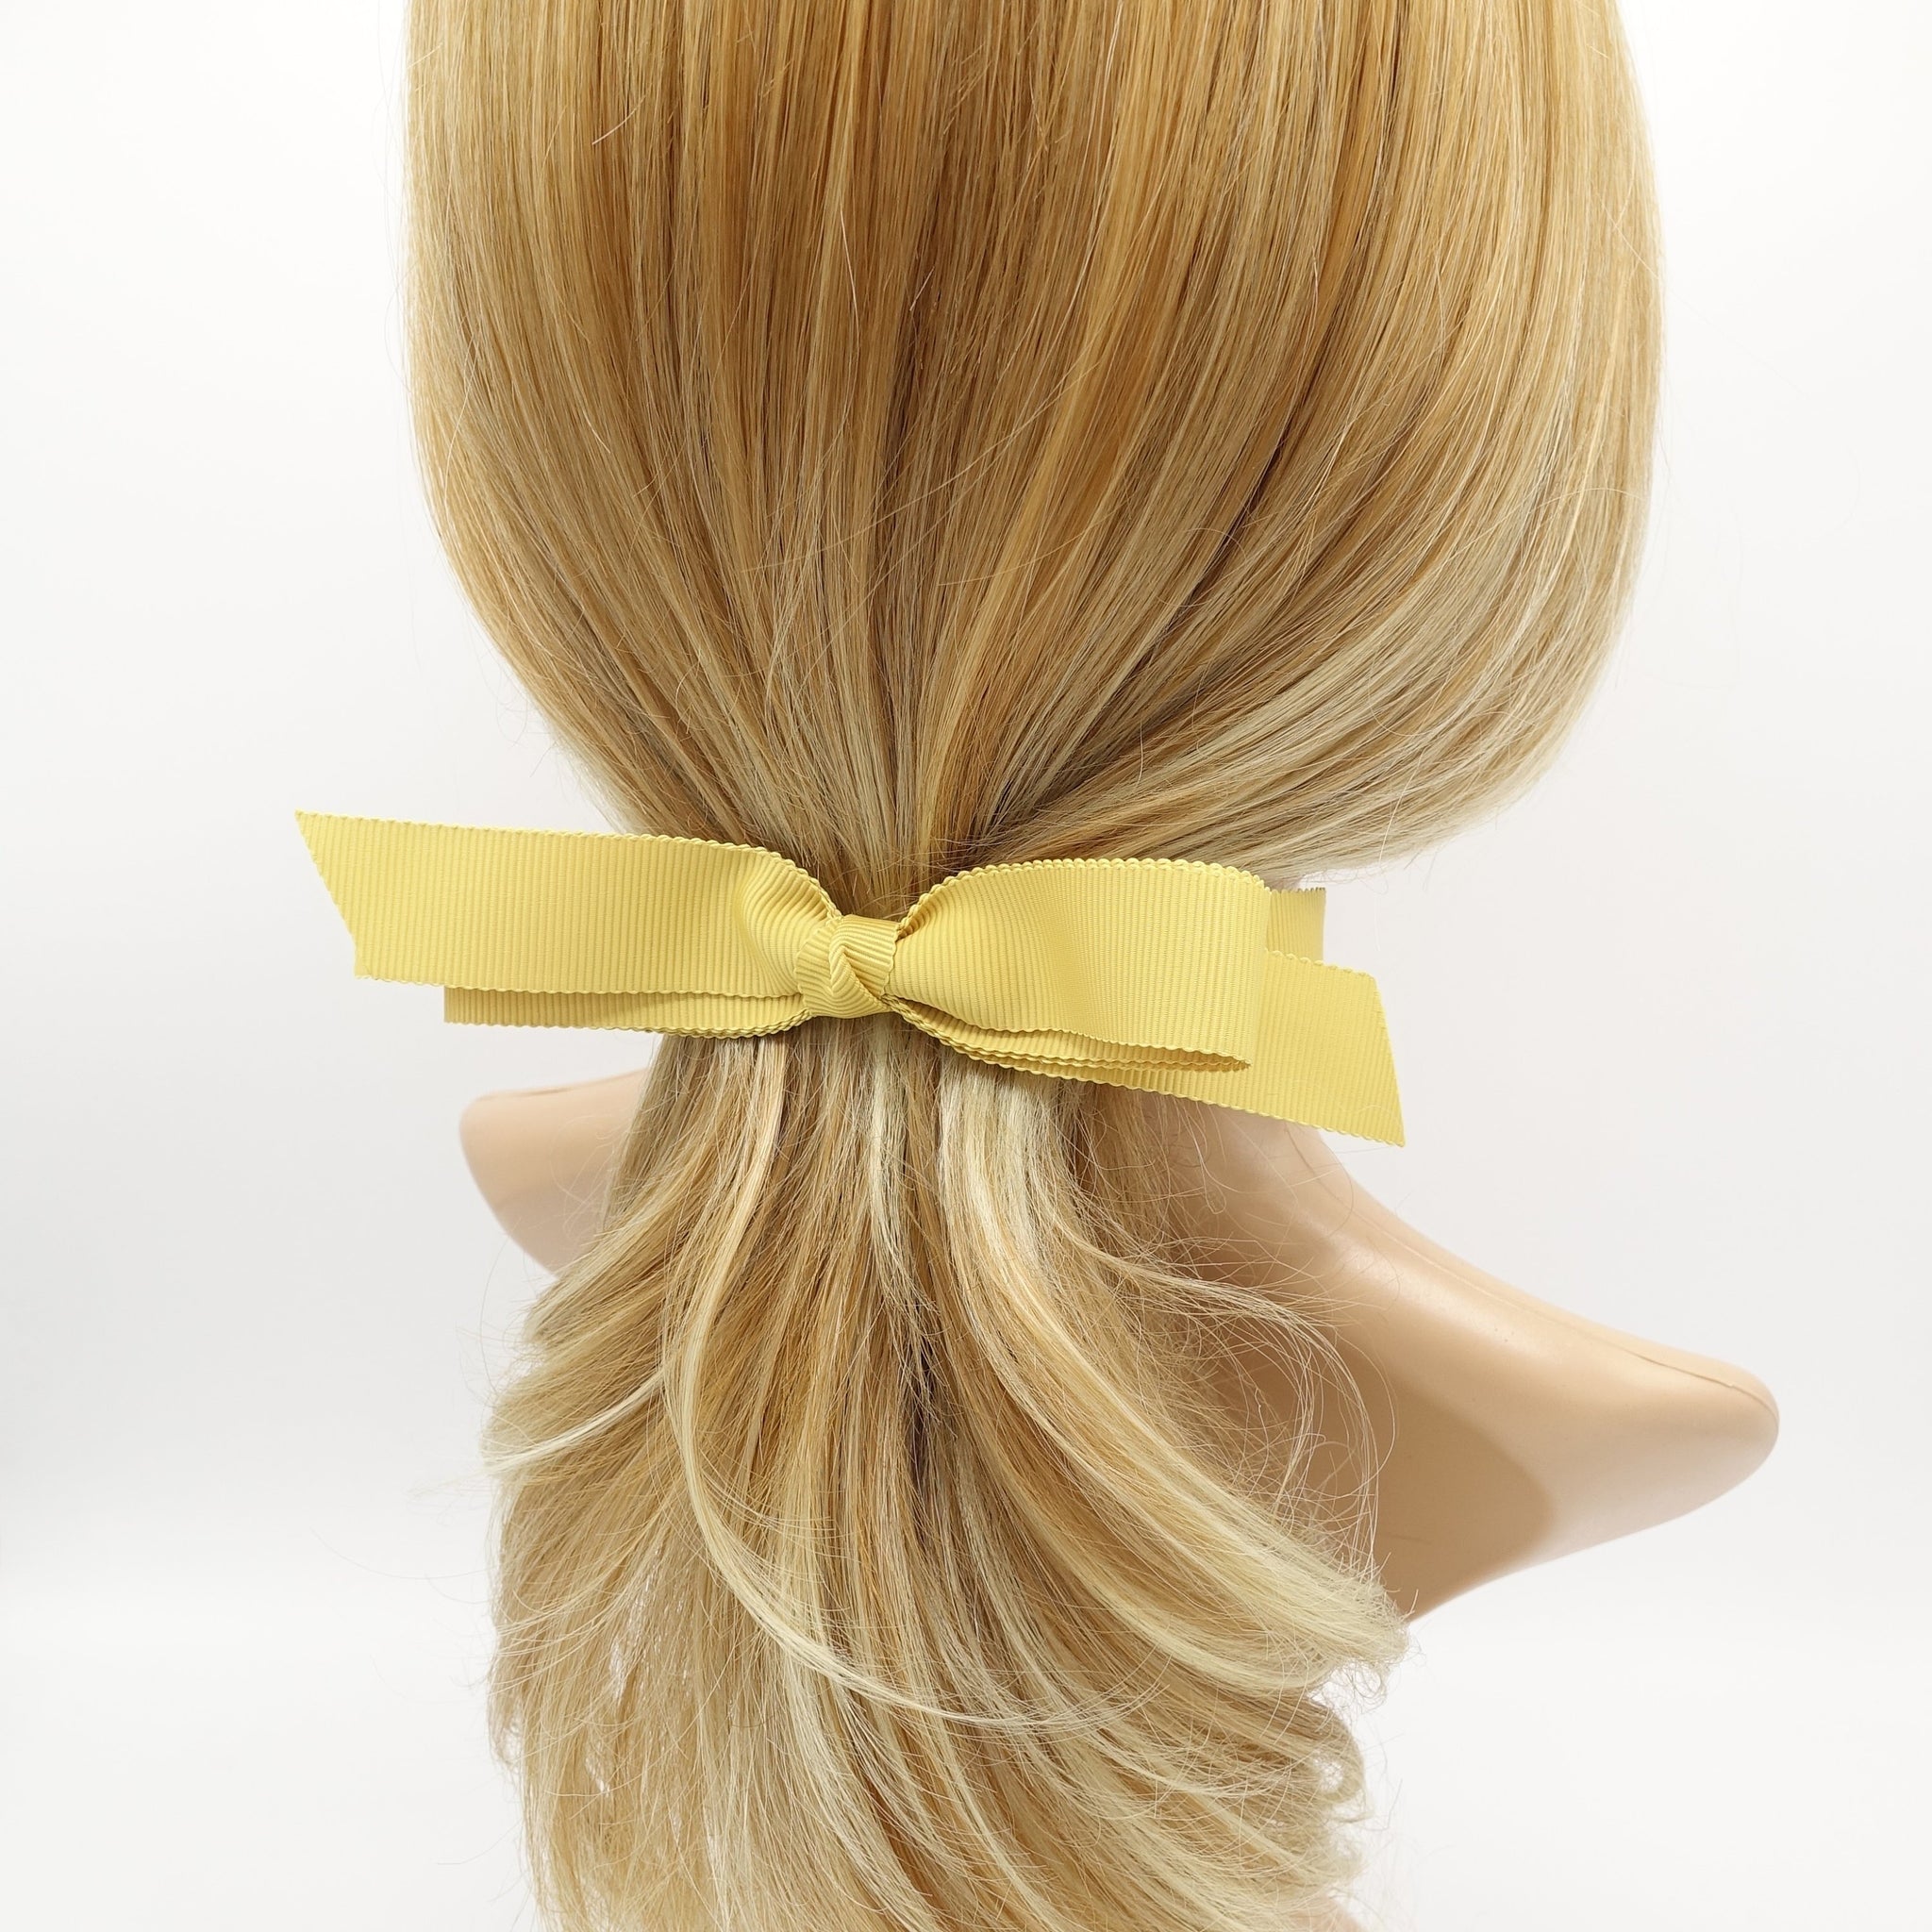 VeryShine claw/banana/barrette Yellow gross grain hair bow narrow ribbon hair accessory for women